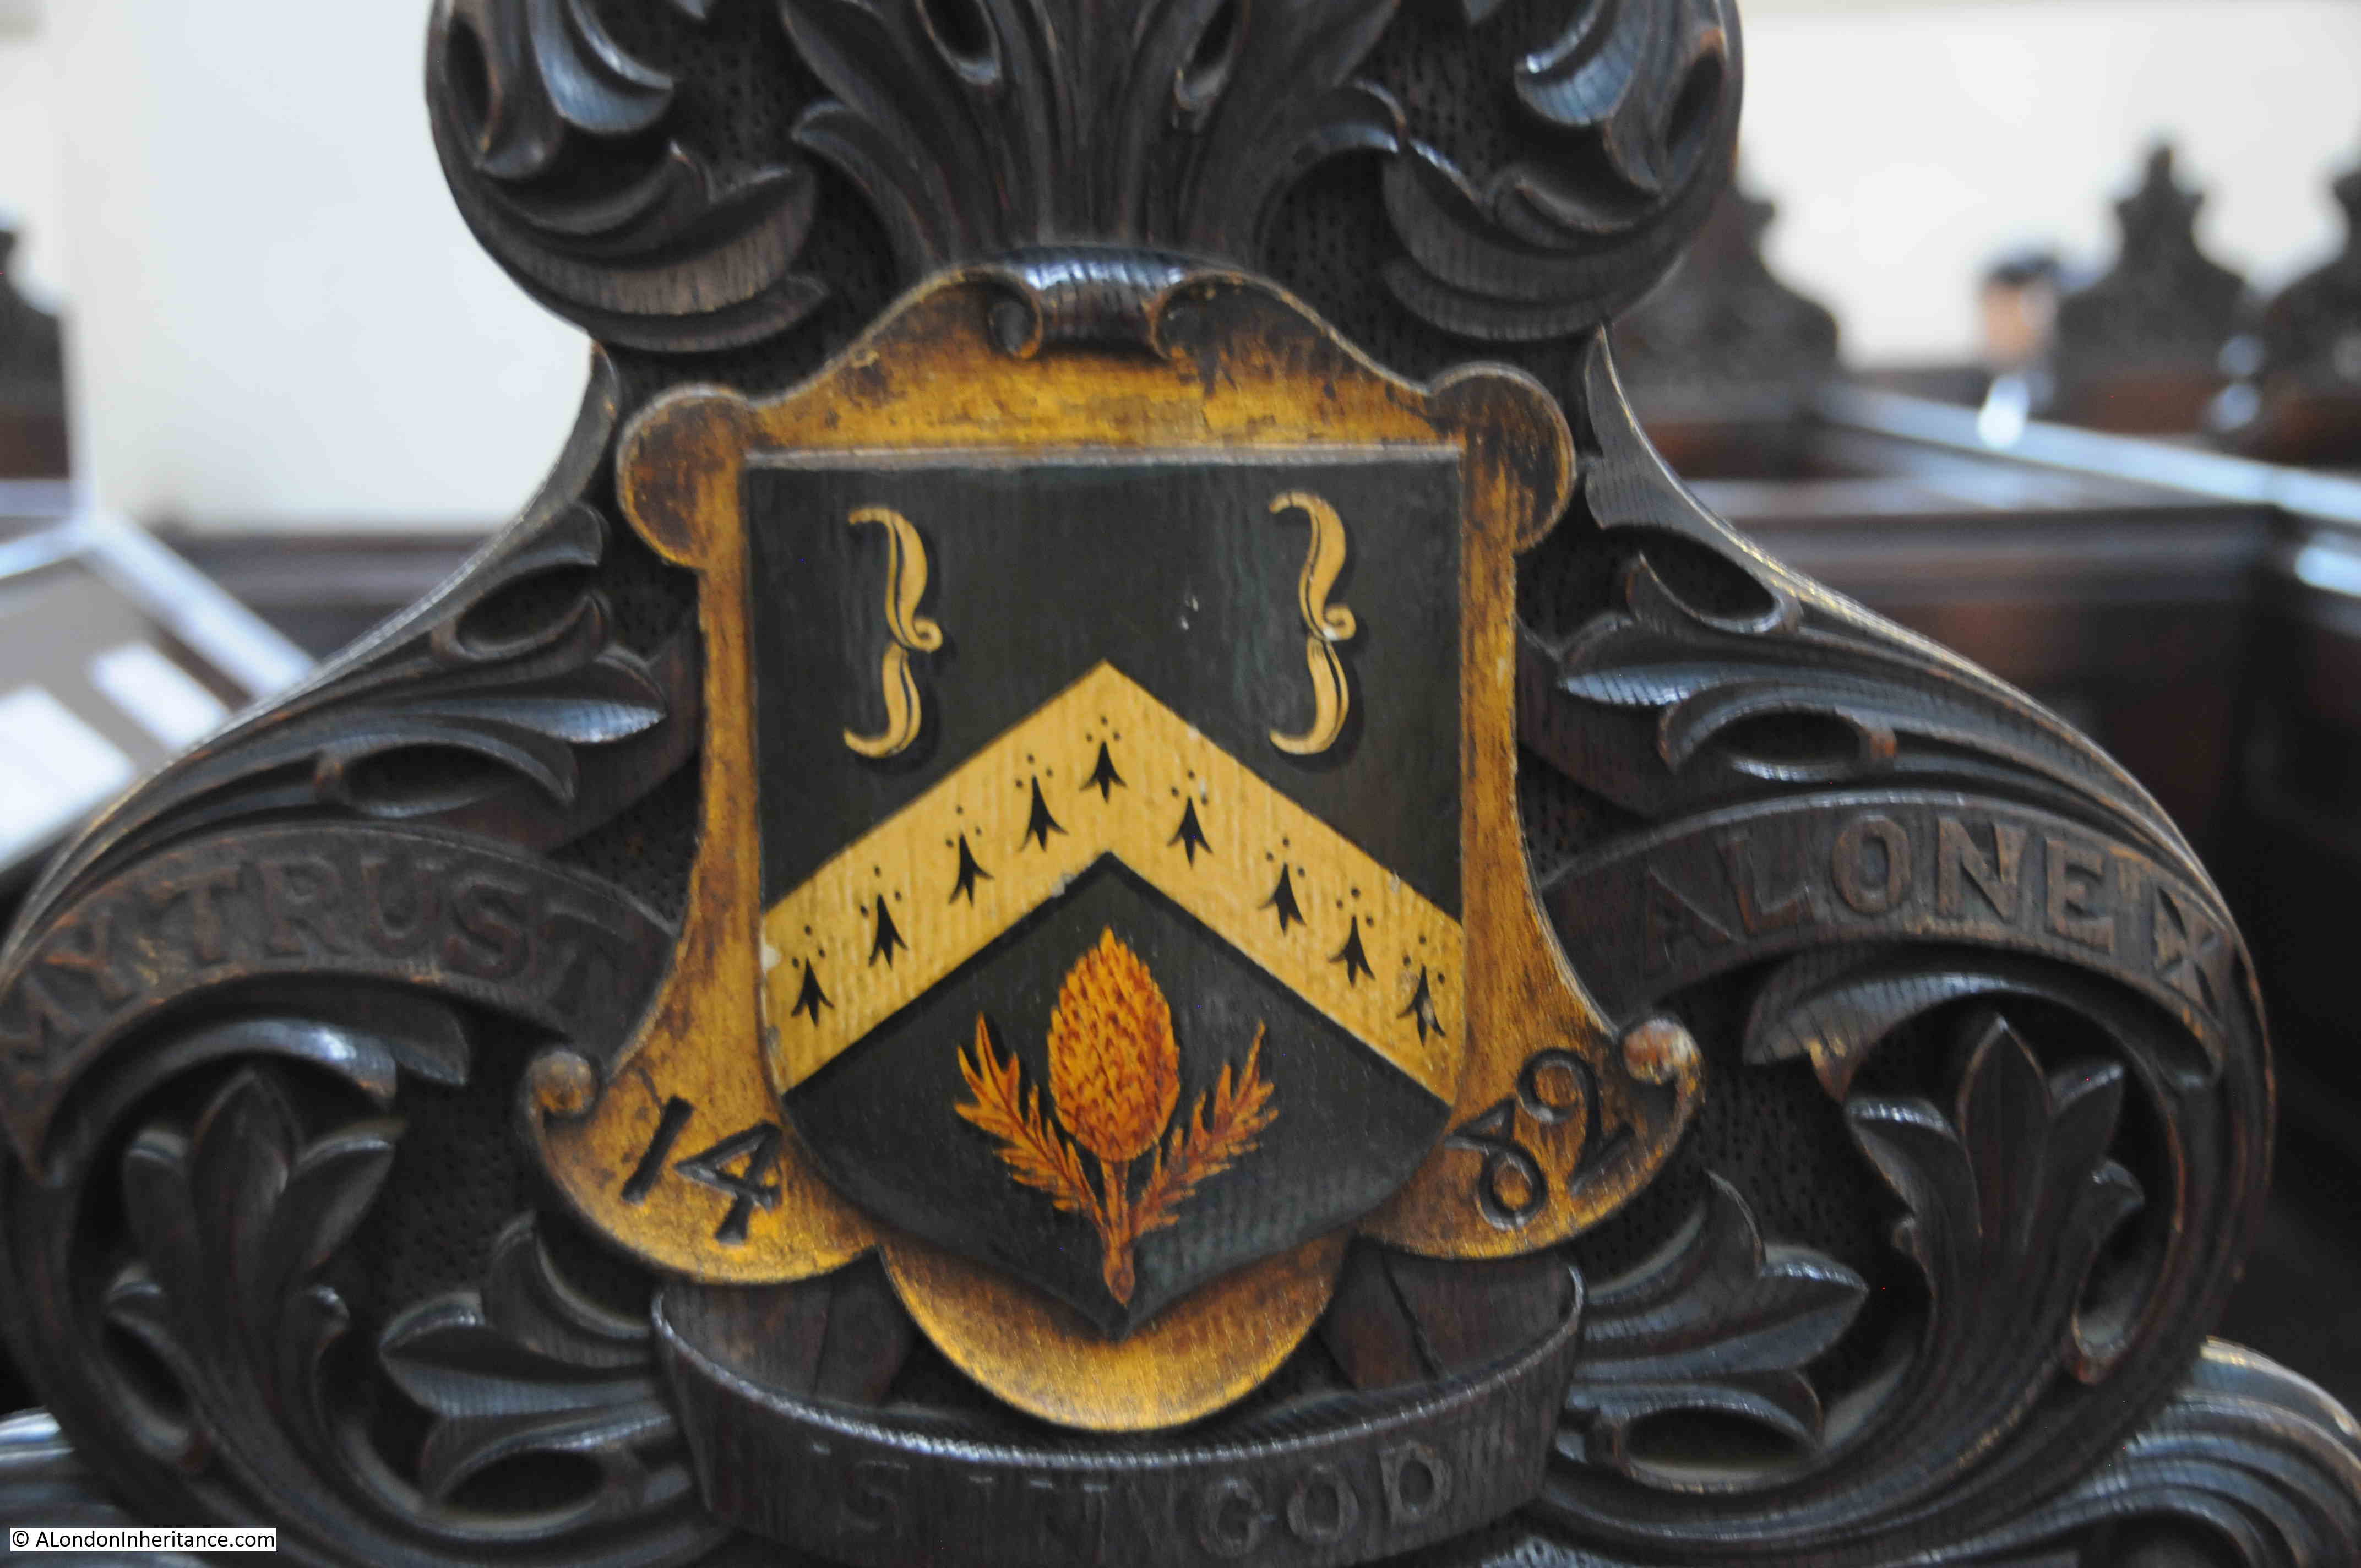 Clothworkers coat of arms